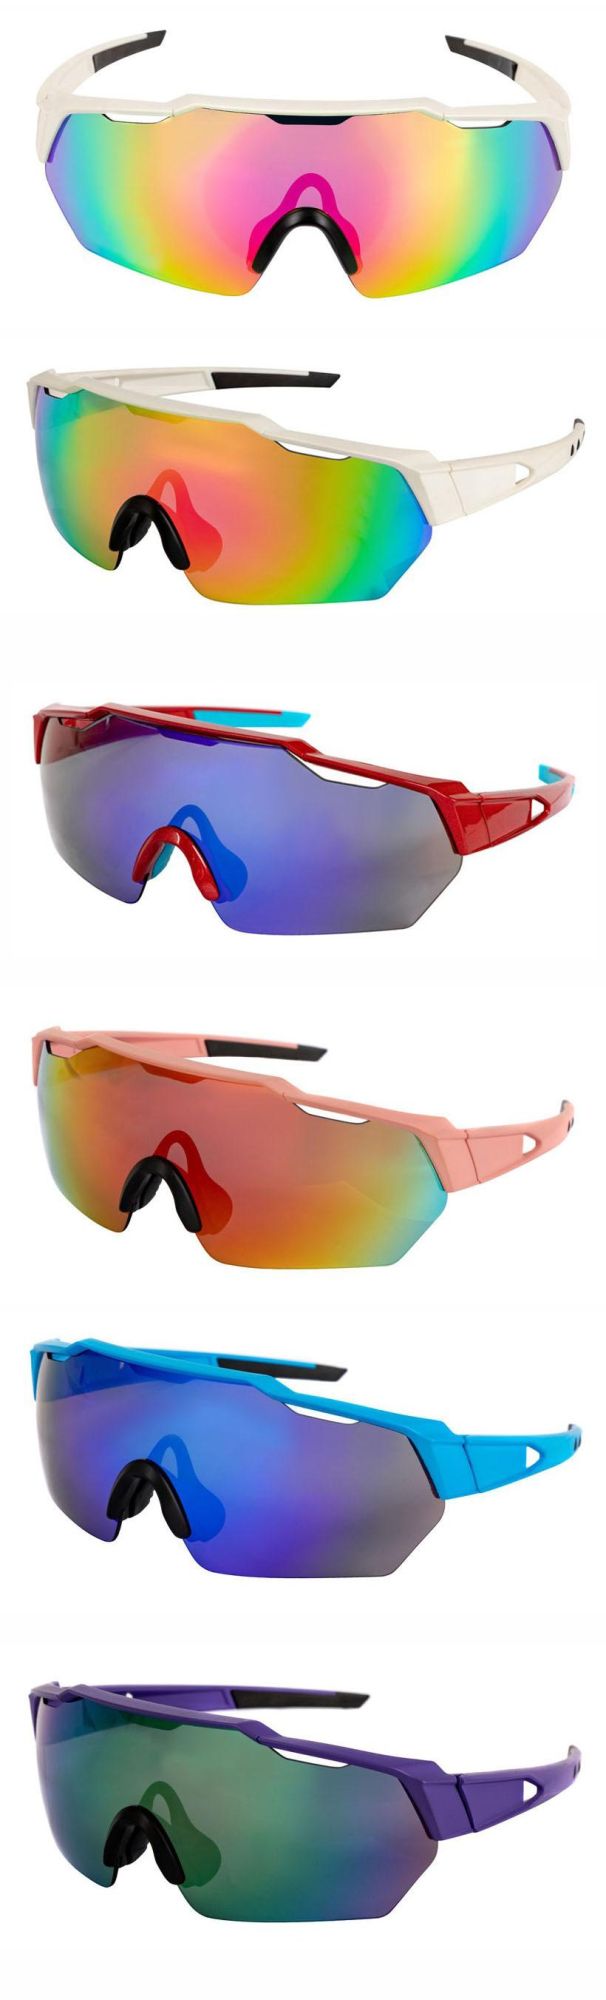 SA0803 100% UV Protection Polycarbonate PC Lens Eyewear Sunglasses Eye Glasses High Quality Popular Walking Protective Glasses Mask for Men Women Unisex